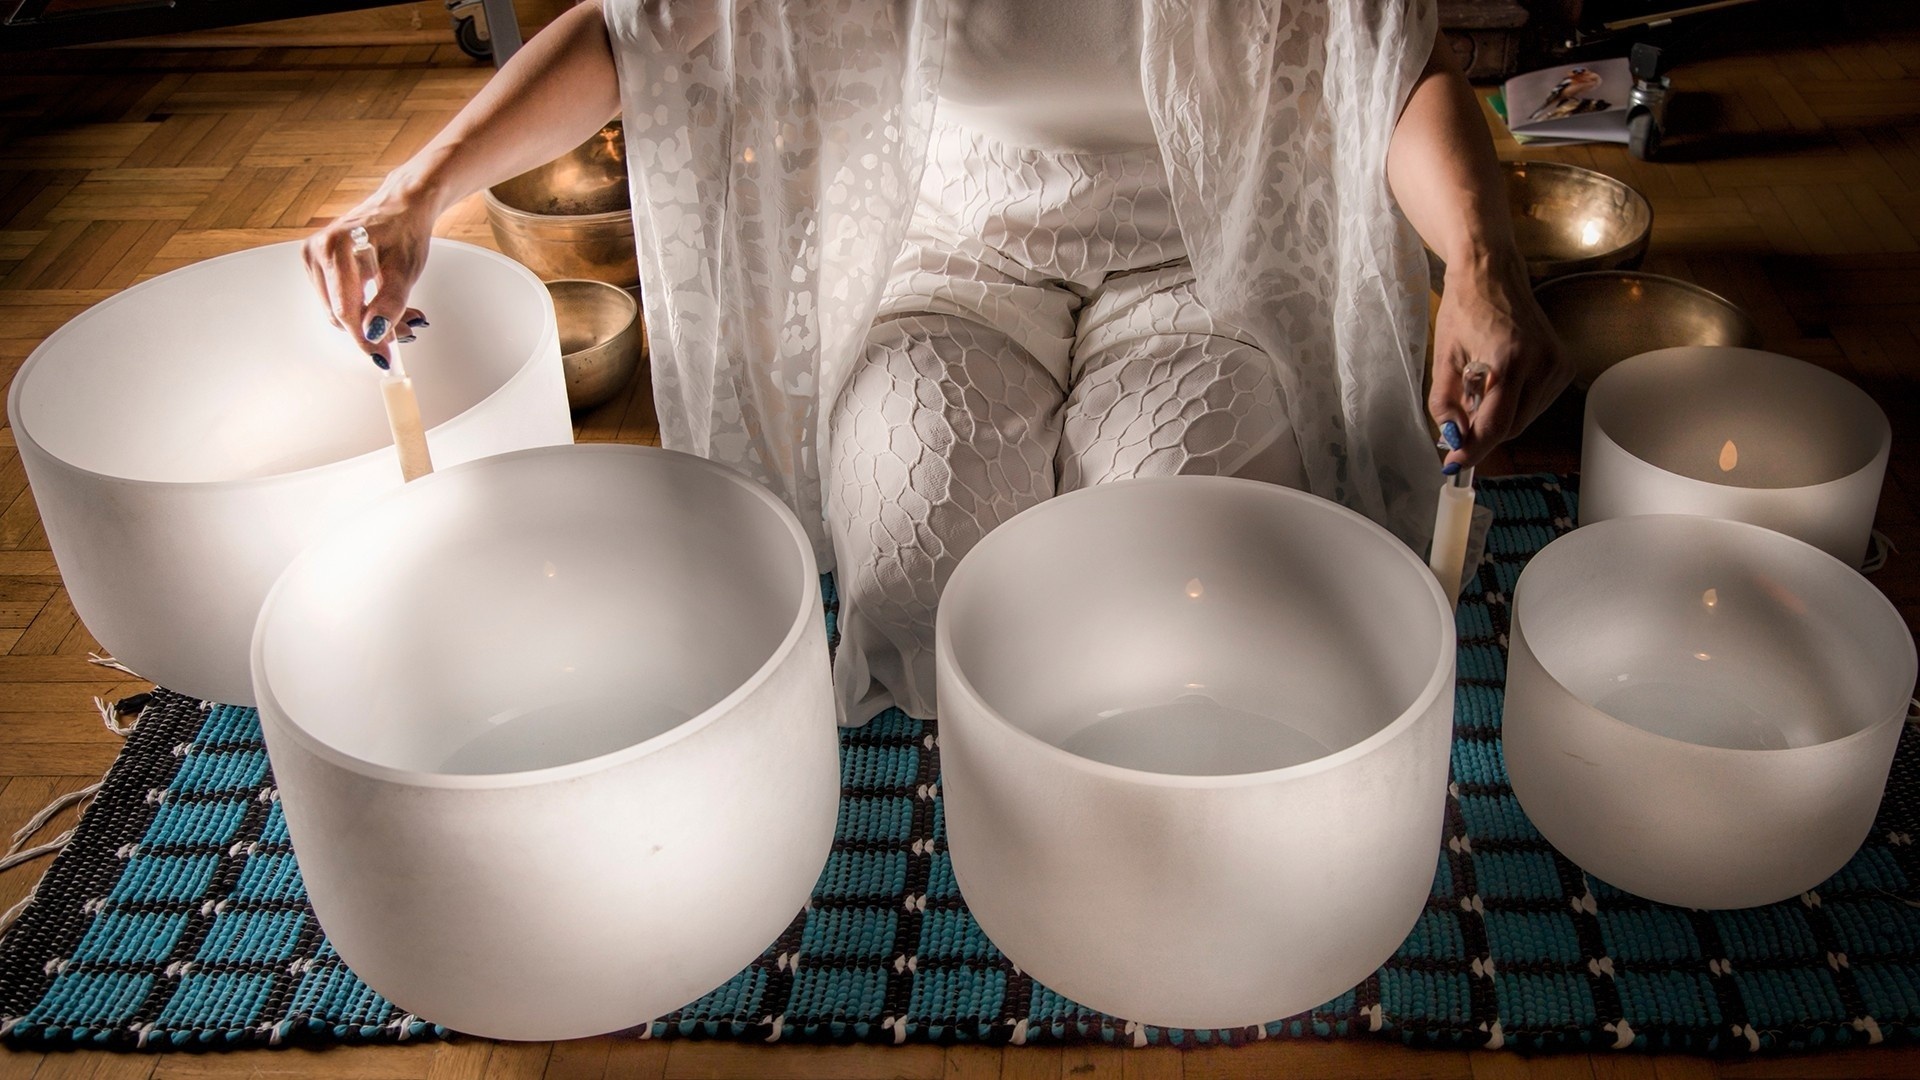 KATOOMBA, NSW - Sound Healing with Crystal Singing Bowls